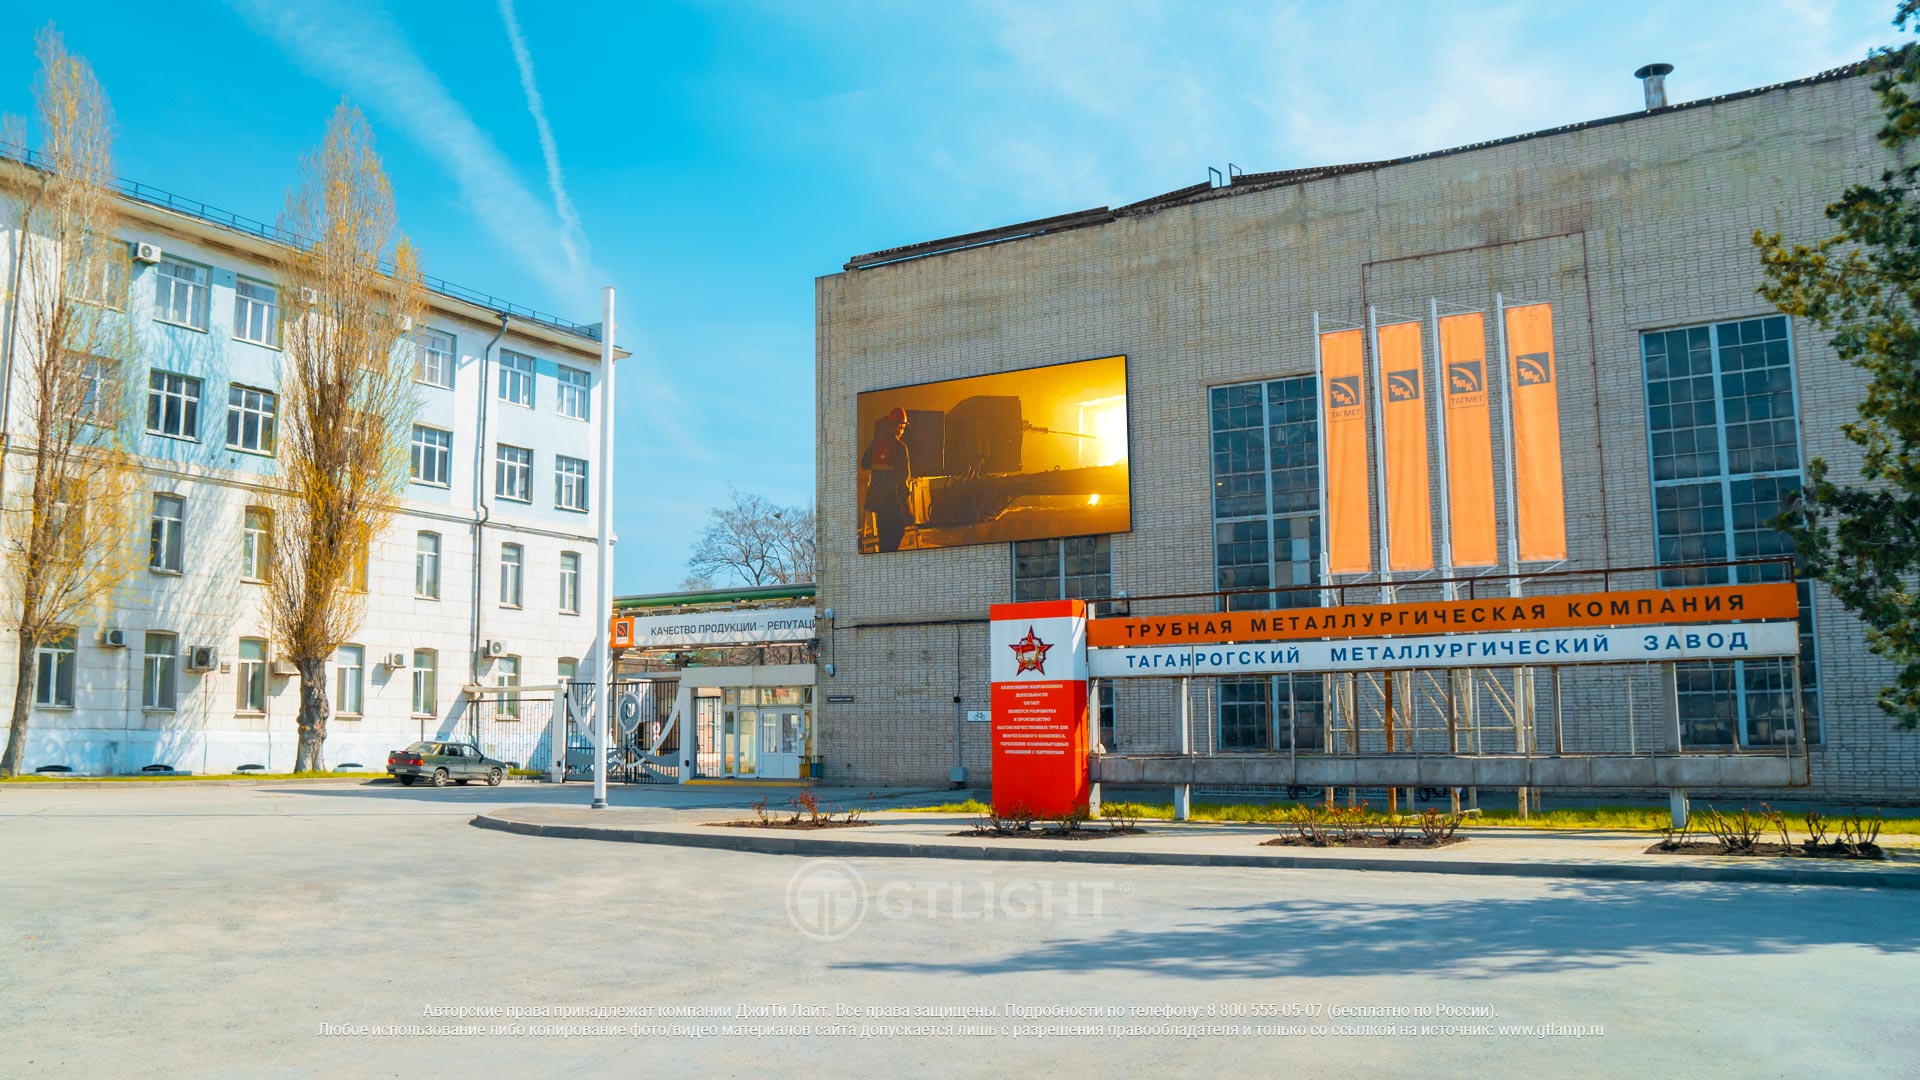 Светодиодный уличный экран на фасад здания, Таганрог, АО «Таганрогский металлургический завод» — ДжиТи Лайт. Россия, фото 2